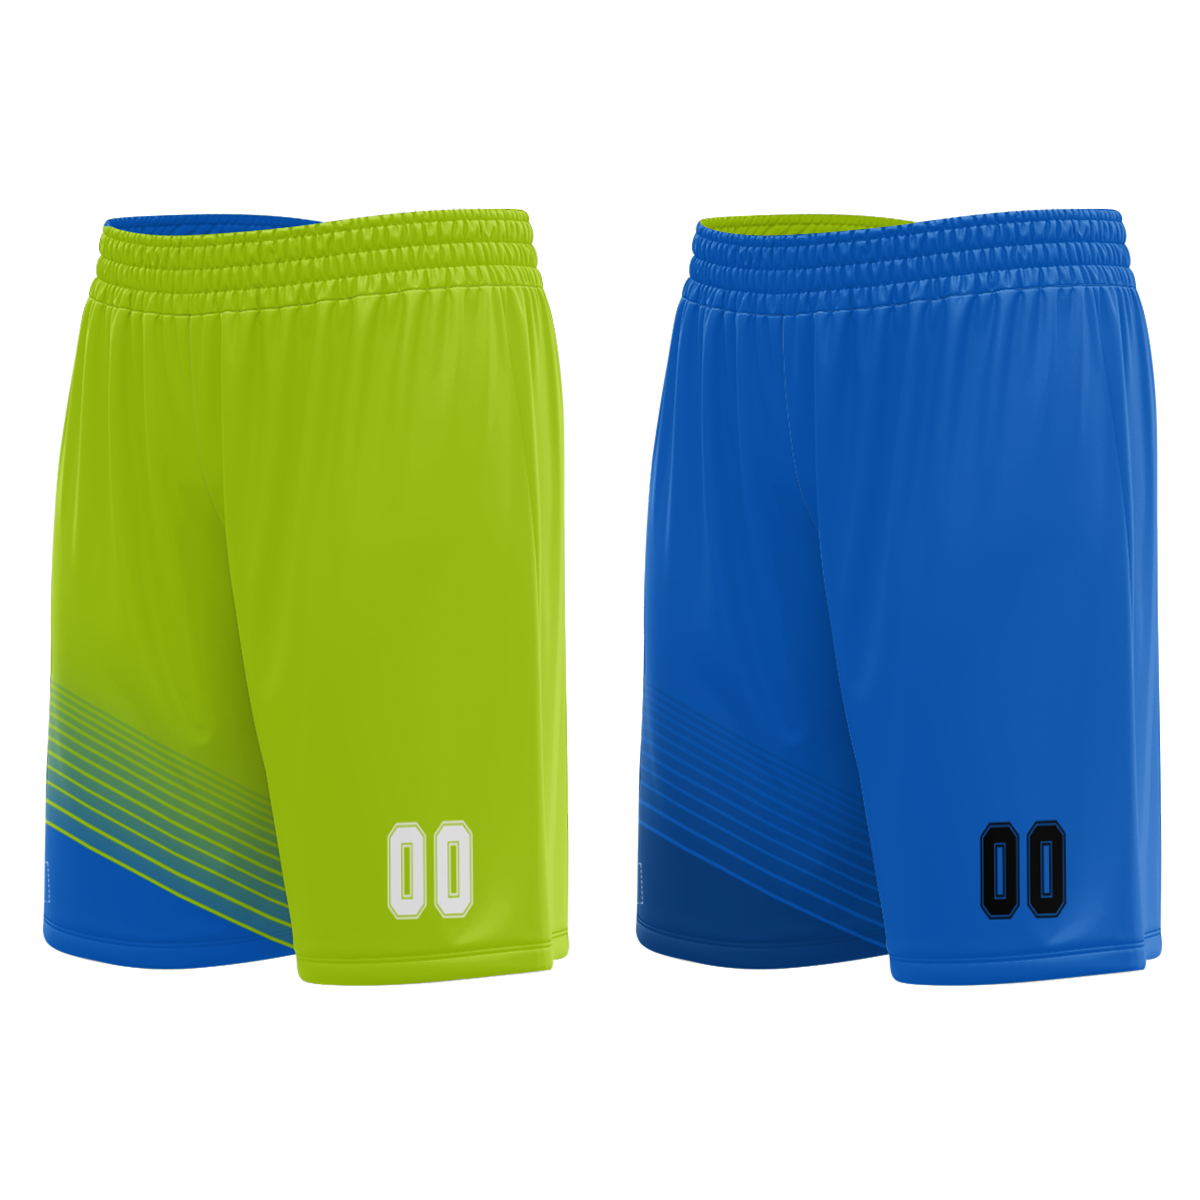 wholesale-mens-basketball-jerseys-custom-printing-on-demand-polyester-reversible-basketball-shirts-at-cj-pod-8